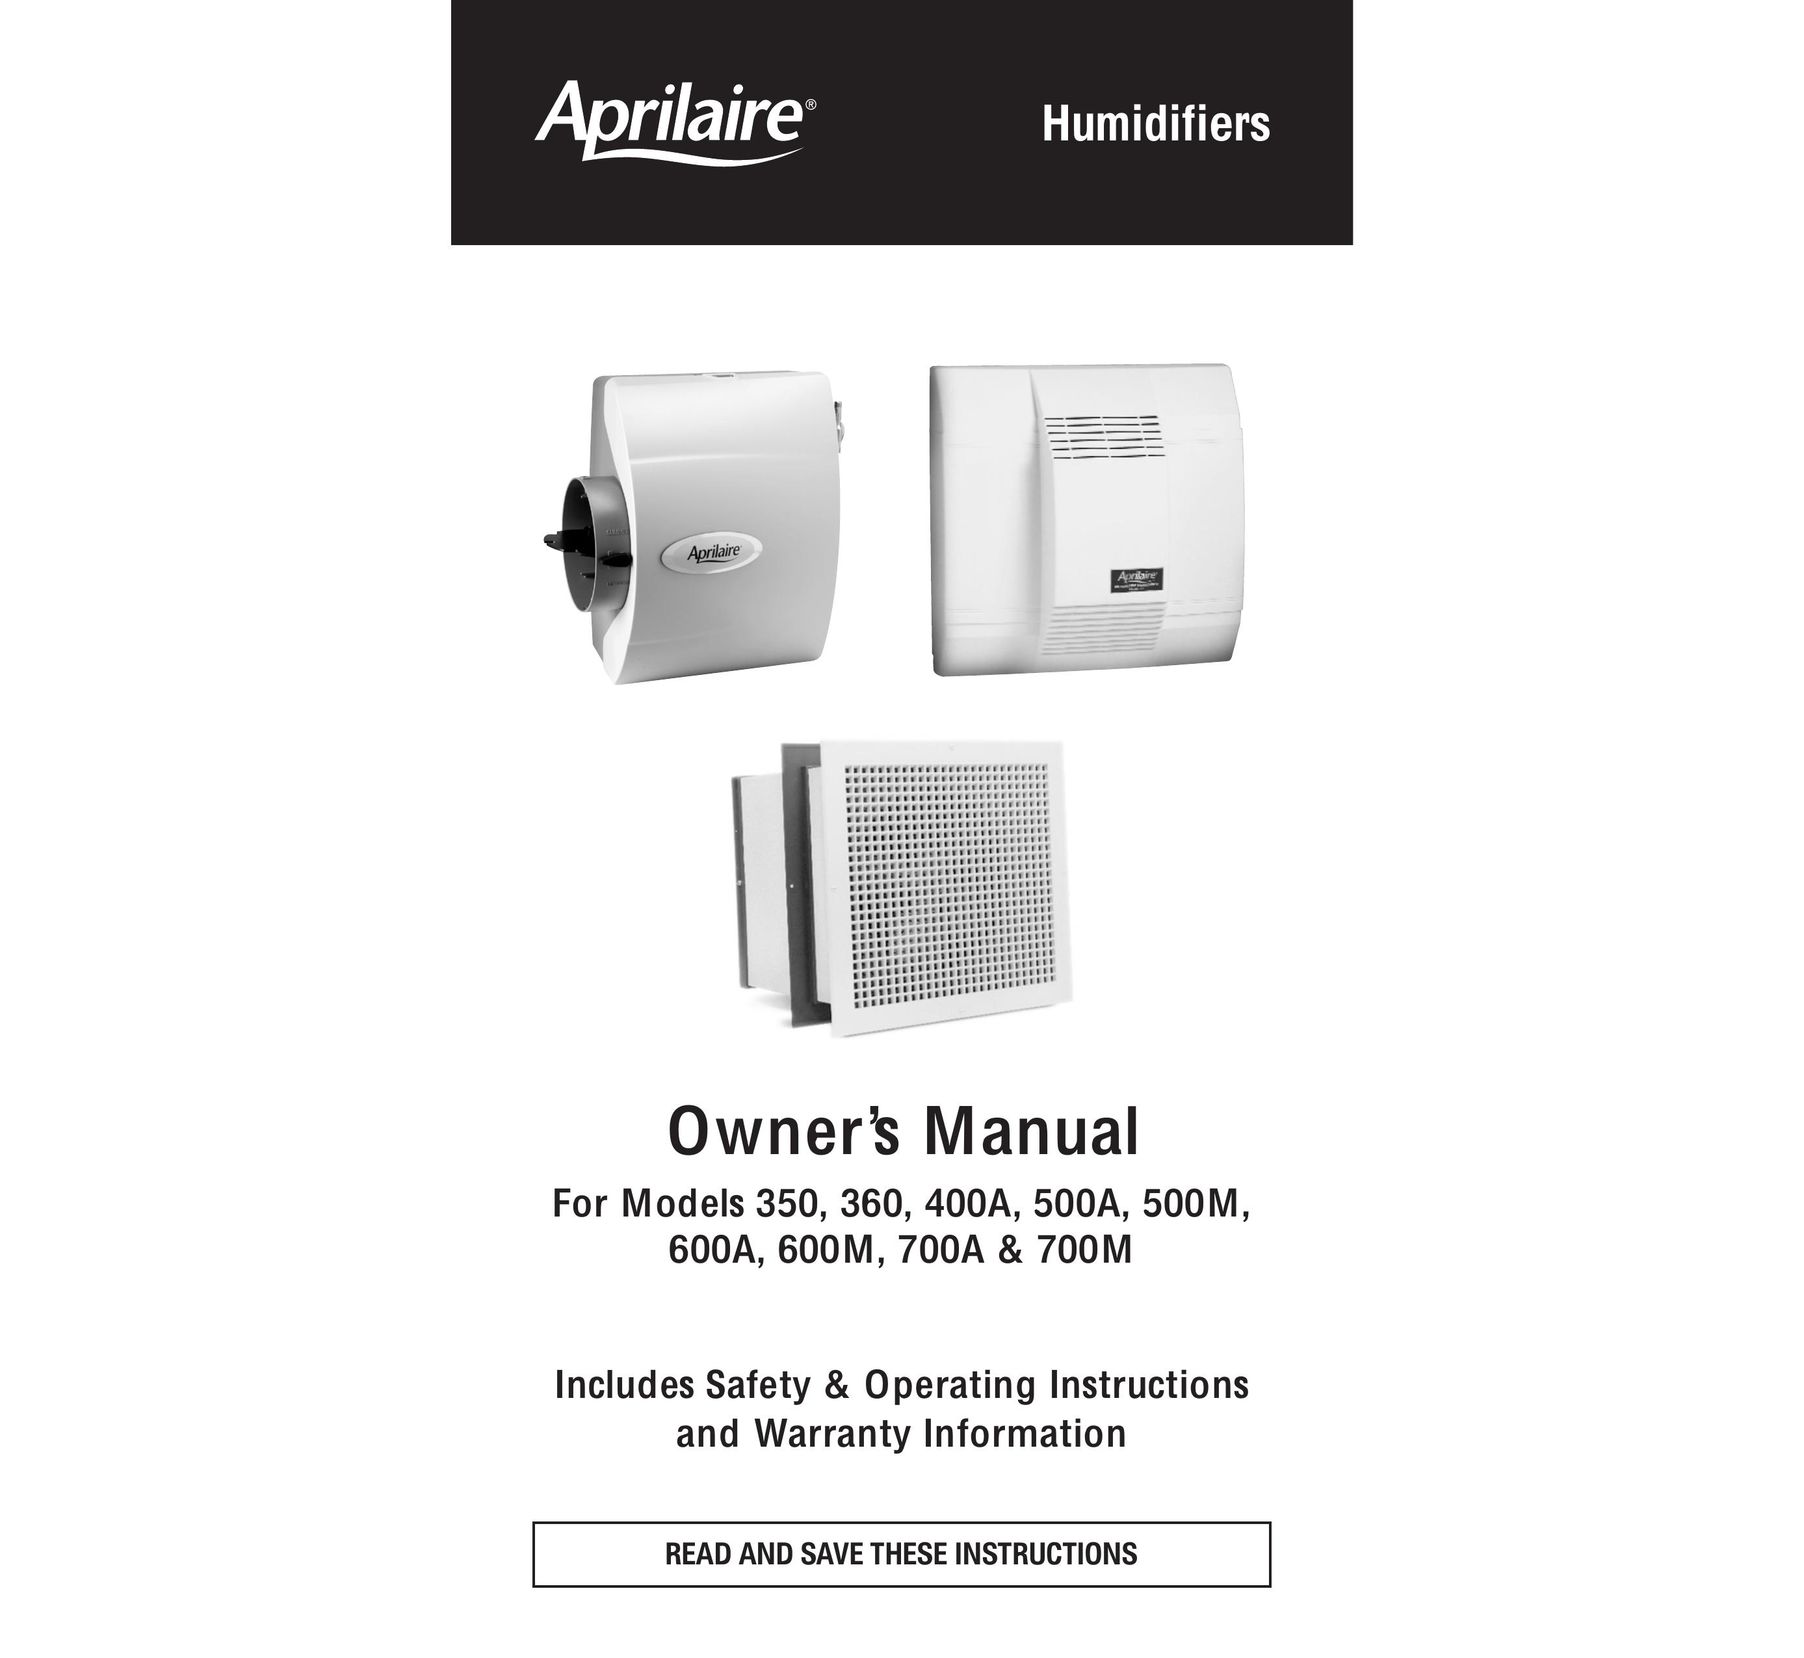 Aprilaire 500M Dehumidifier User Manual